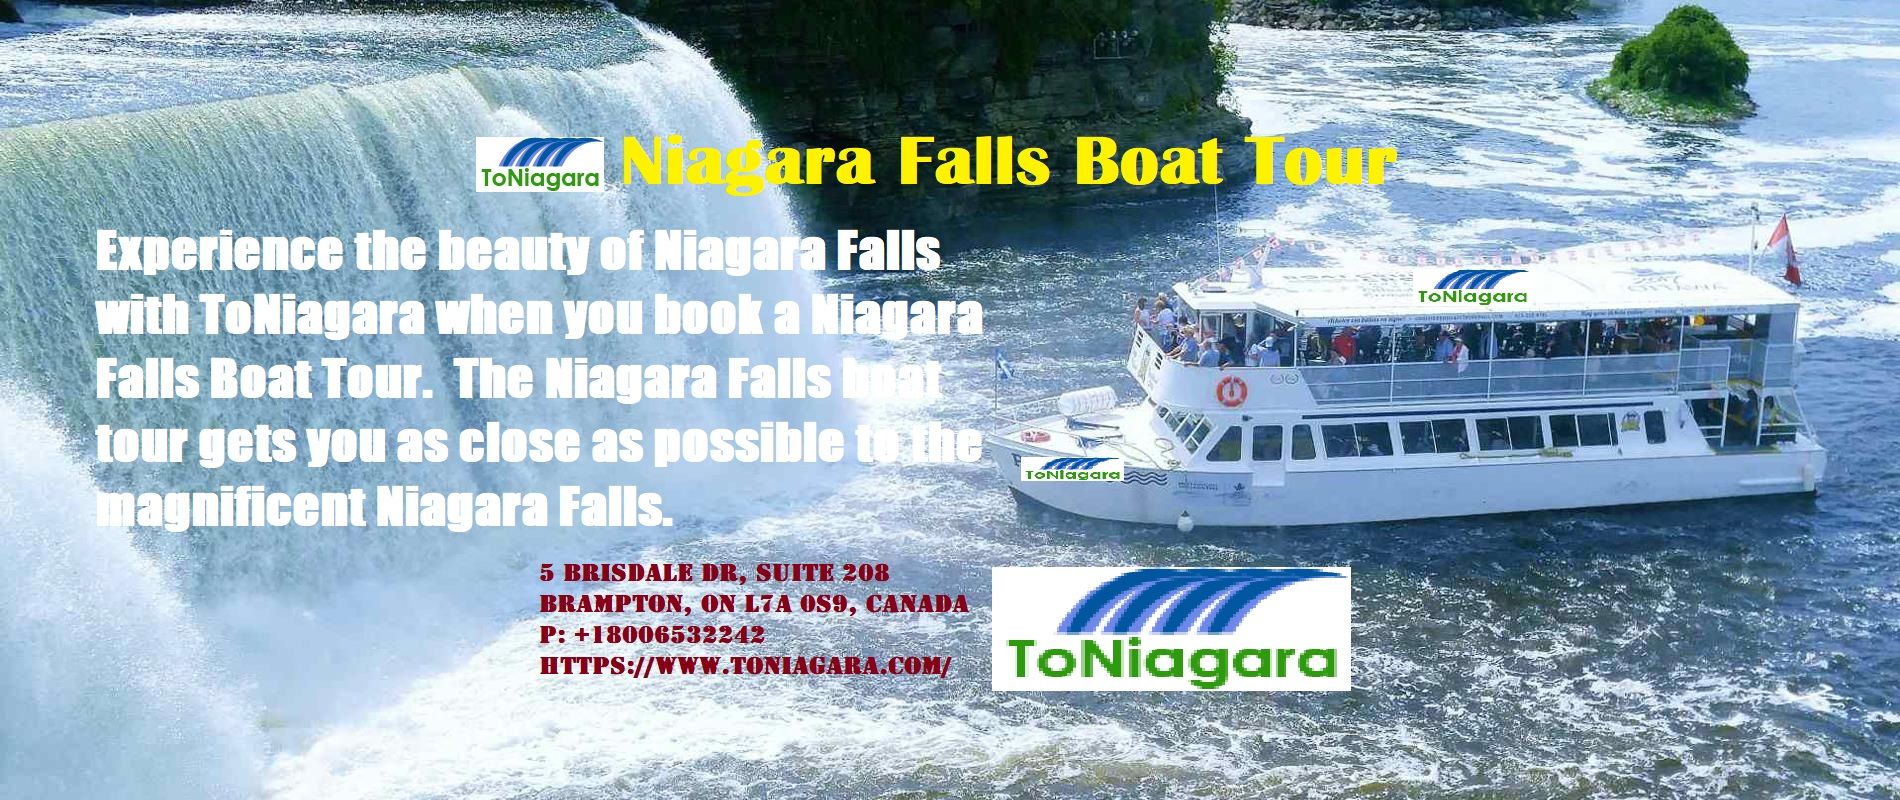 Niagara Falls Boat Tour | ToNiagara